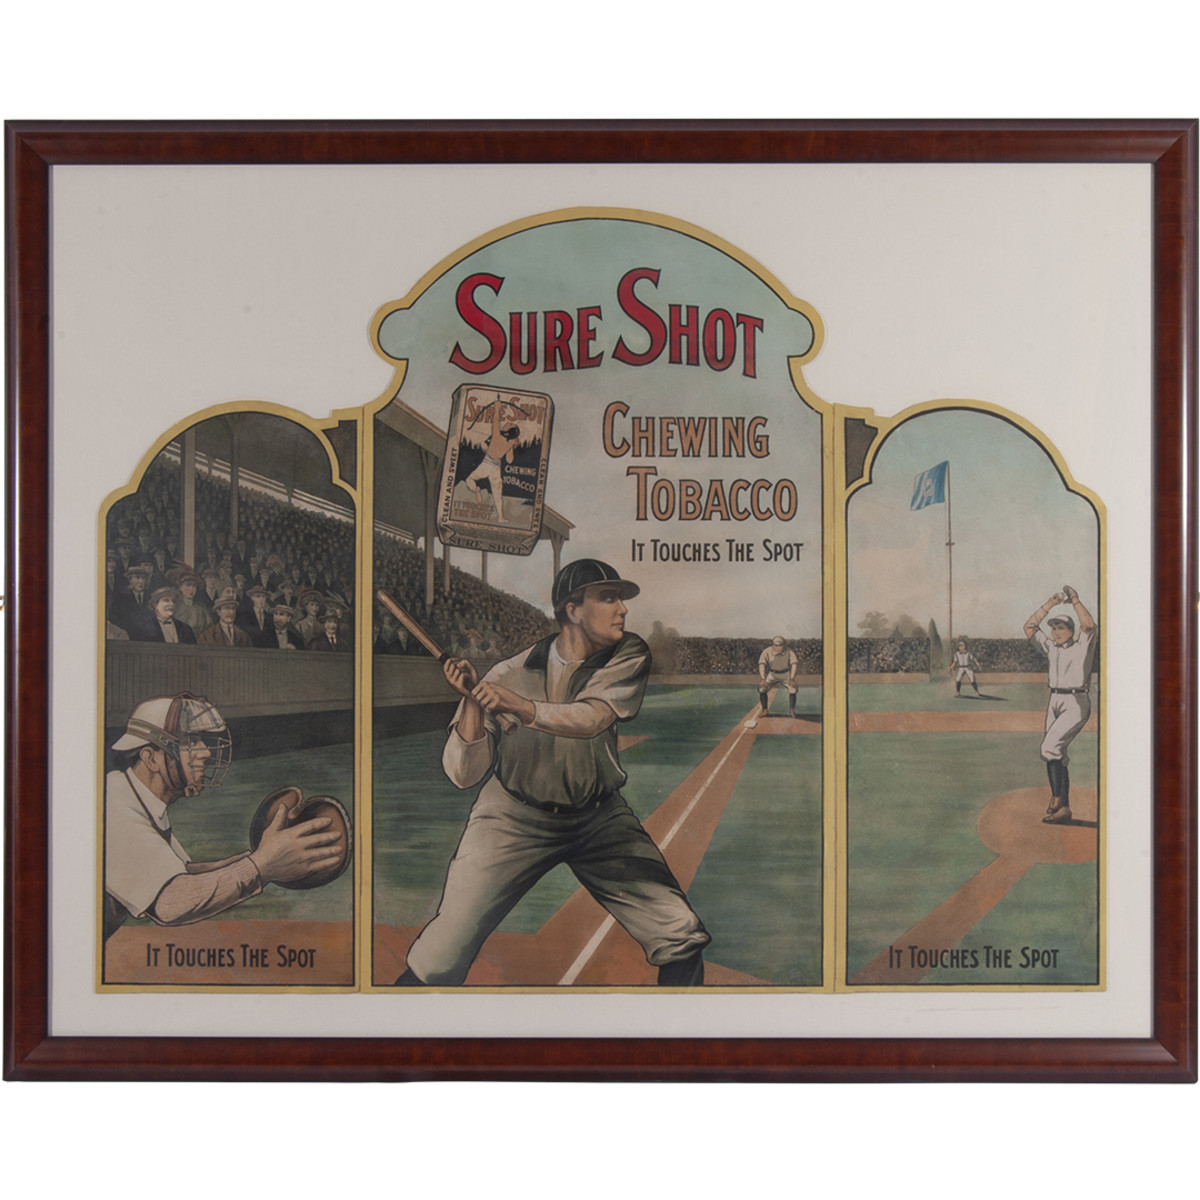 A circa 1910 Sure Shot Chewing Tobacco three-panel advertising display.